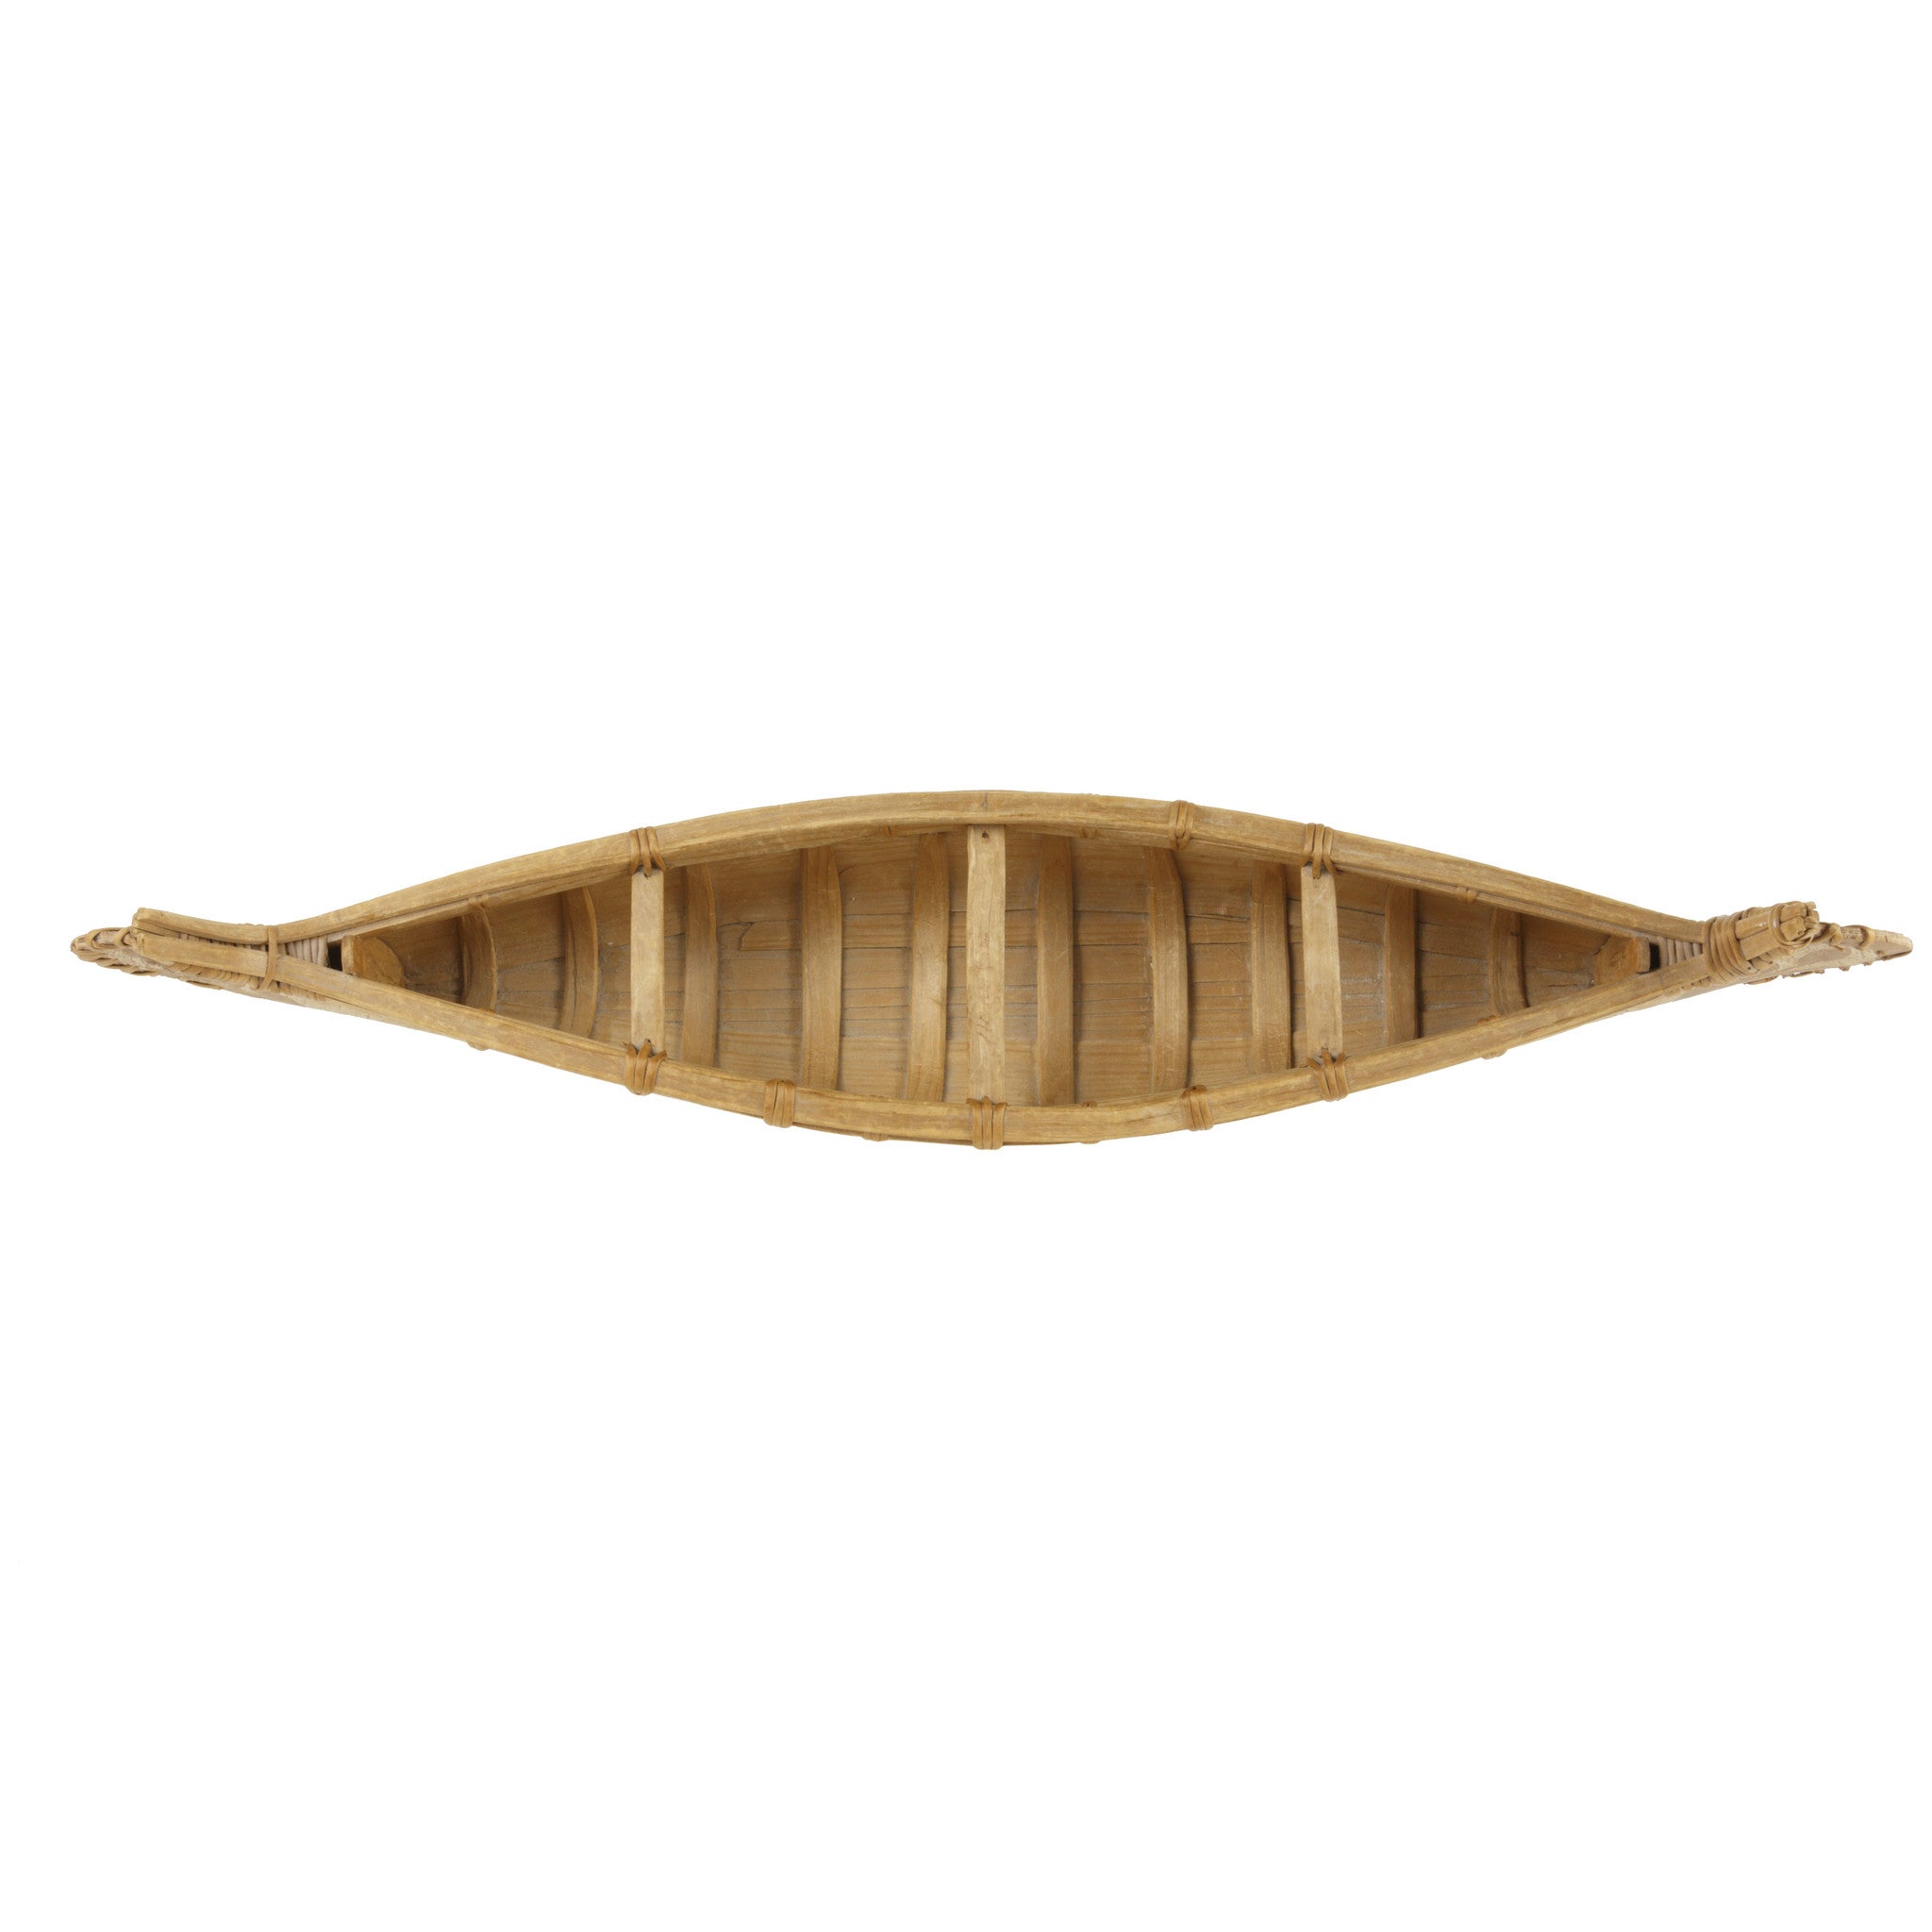 Birch Bark Model Canoe